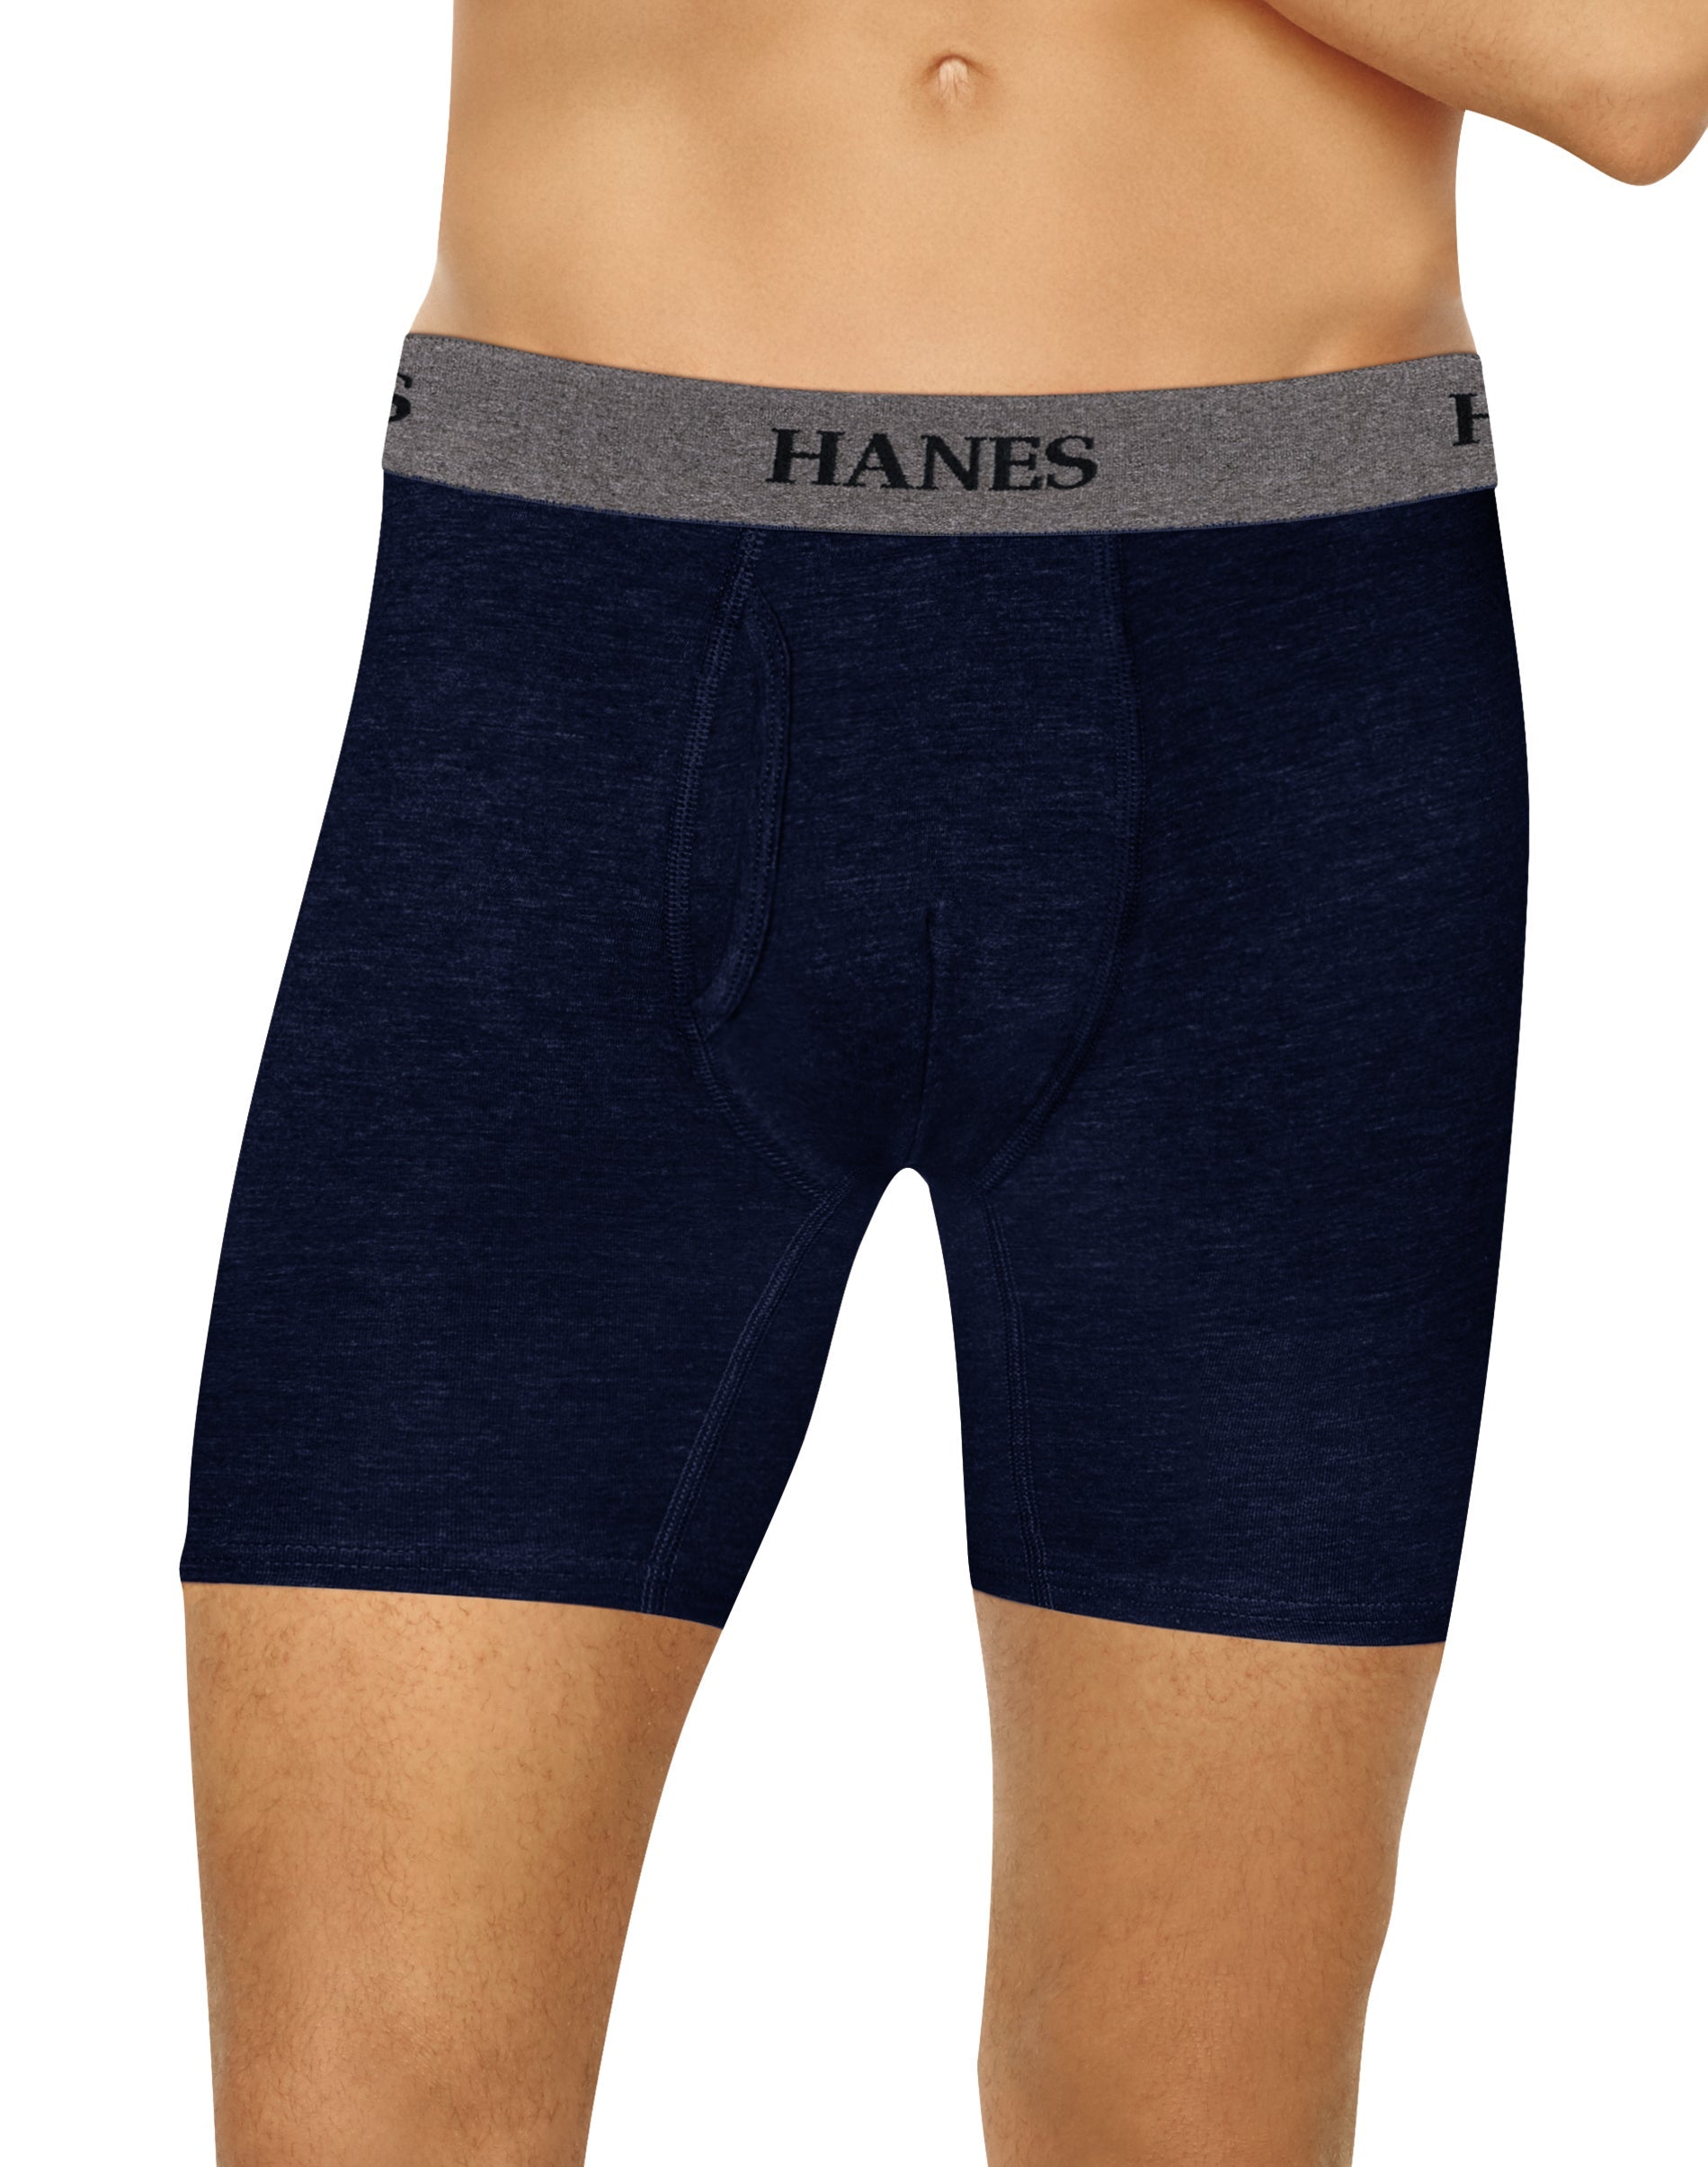 U9BBAX - Hanes Mens Ultimate Cotton Stretch Comfort Flex Fit Boxer Briefs 3- Pack